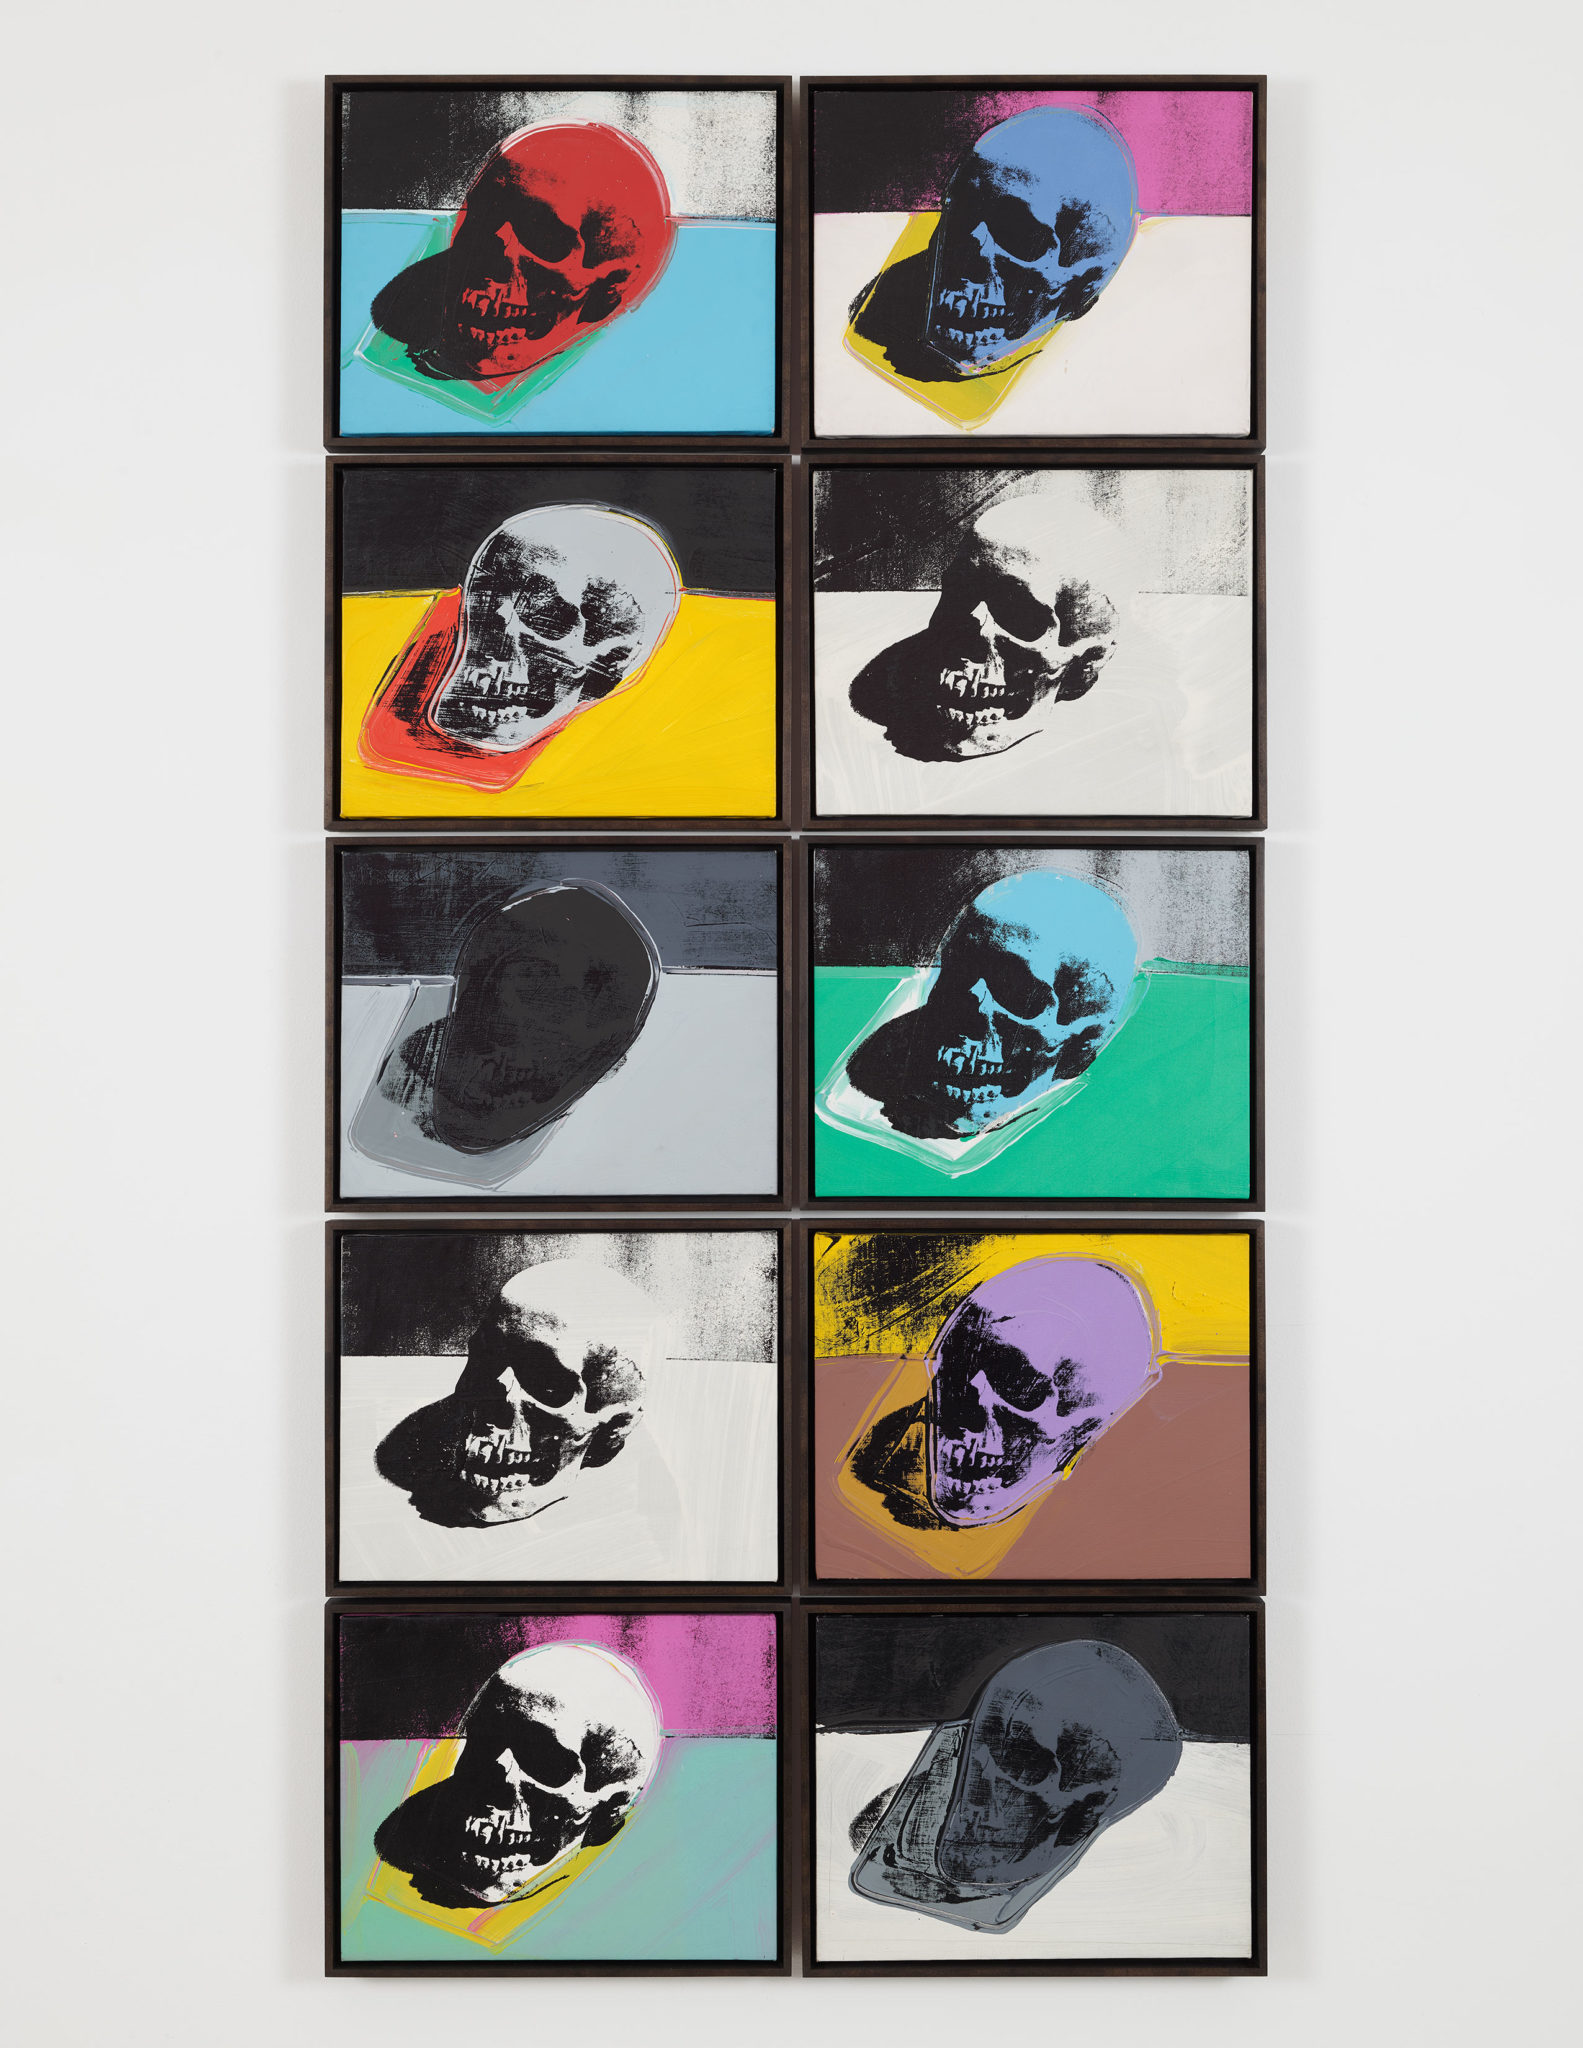 Andy Warhol's print Skulls, 1976